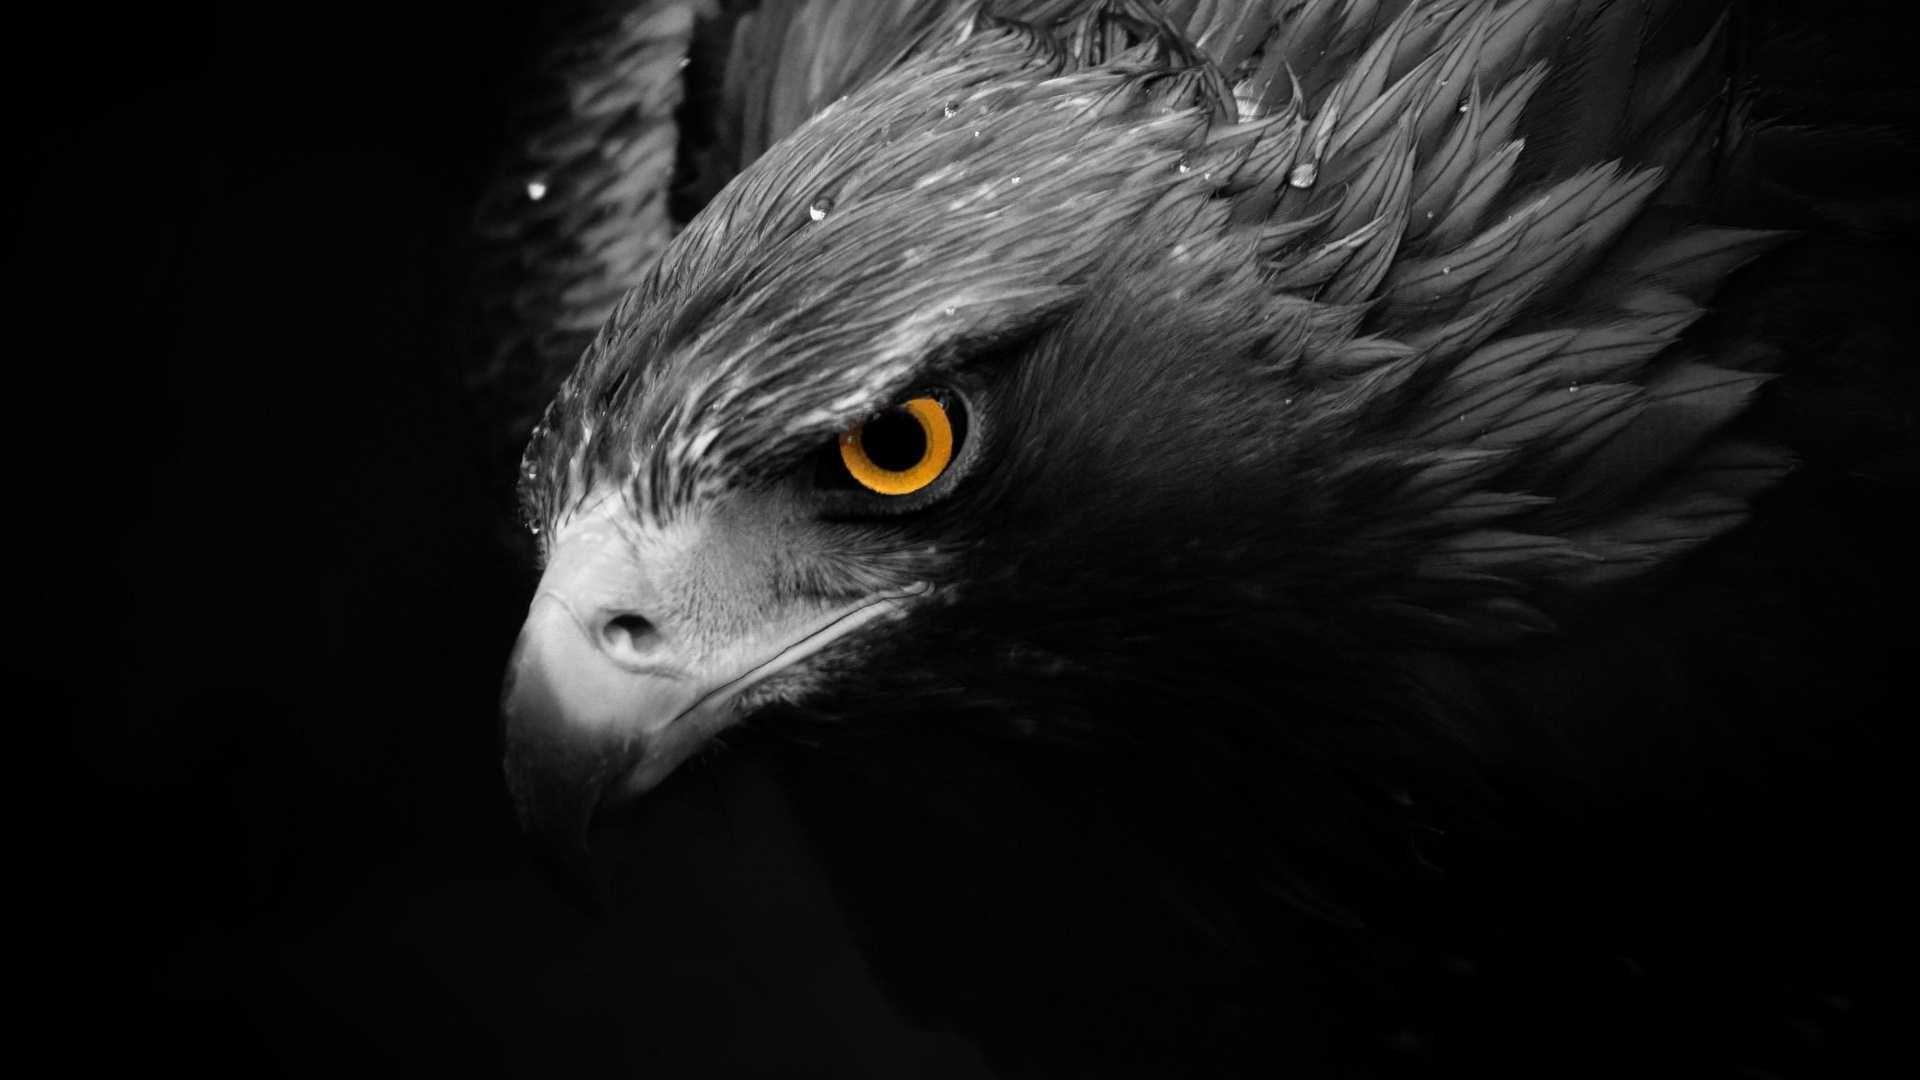 brentwood eagle eye